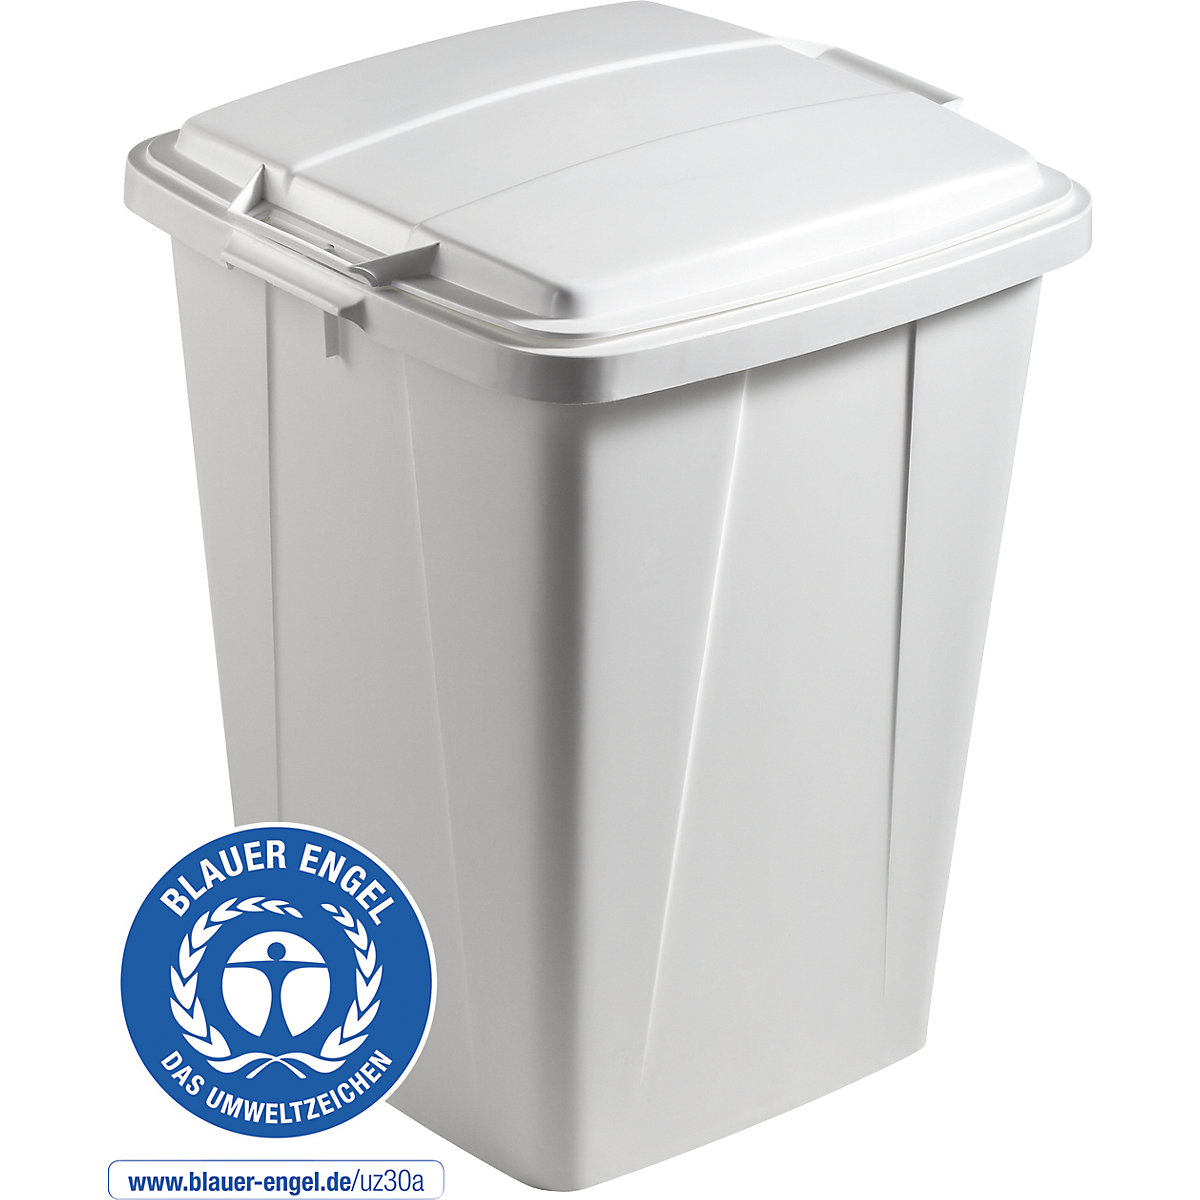 DURABIN® ECO recyclable waste container - DURABLE